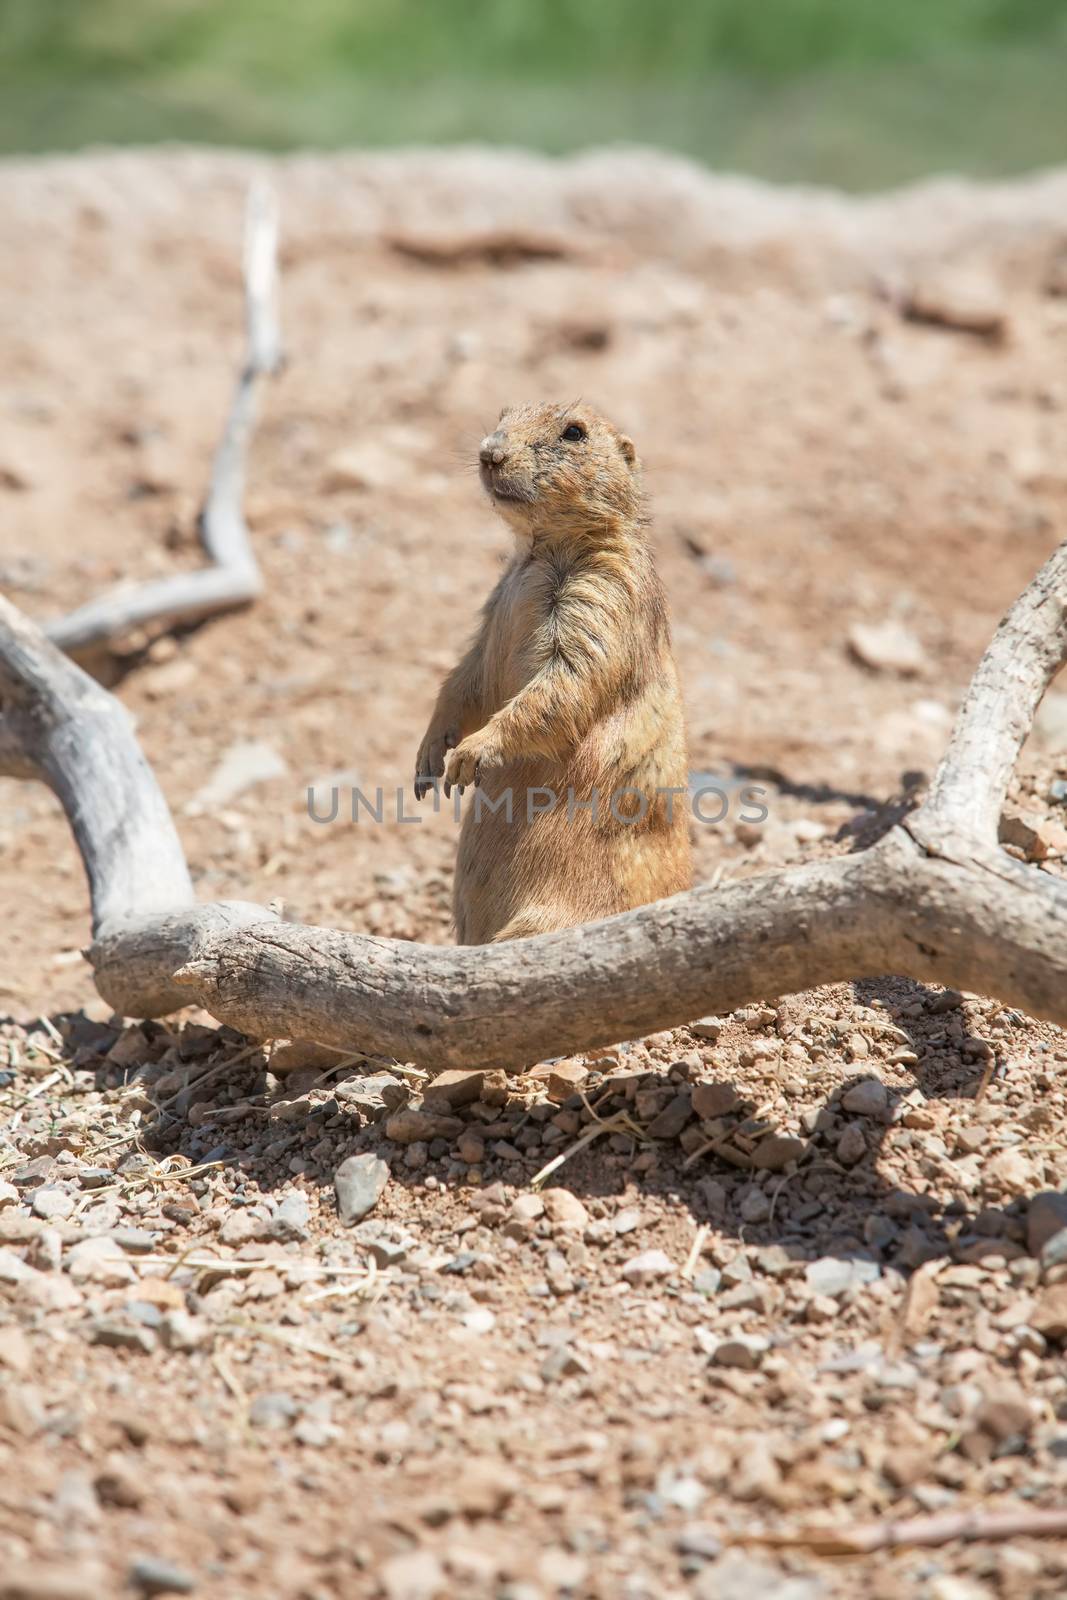 Single cute prairie dog standing up in desert